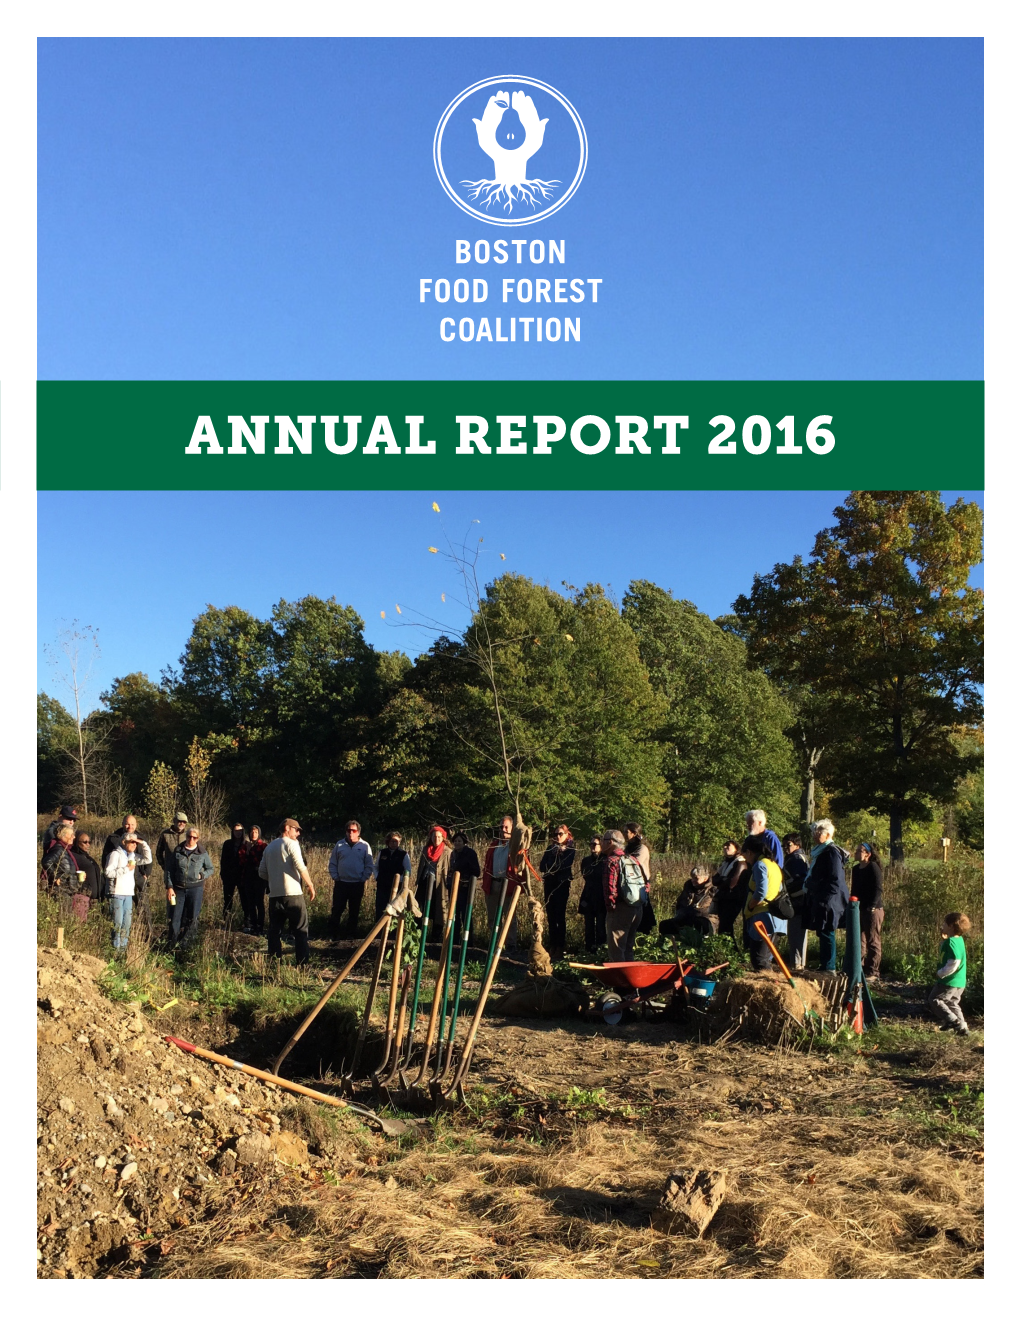 ANNUAL REPORT 2016 Dear Boston Food Forest Coalition